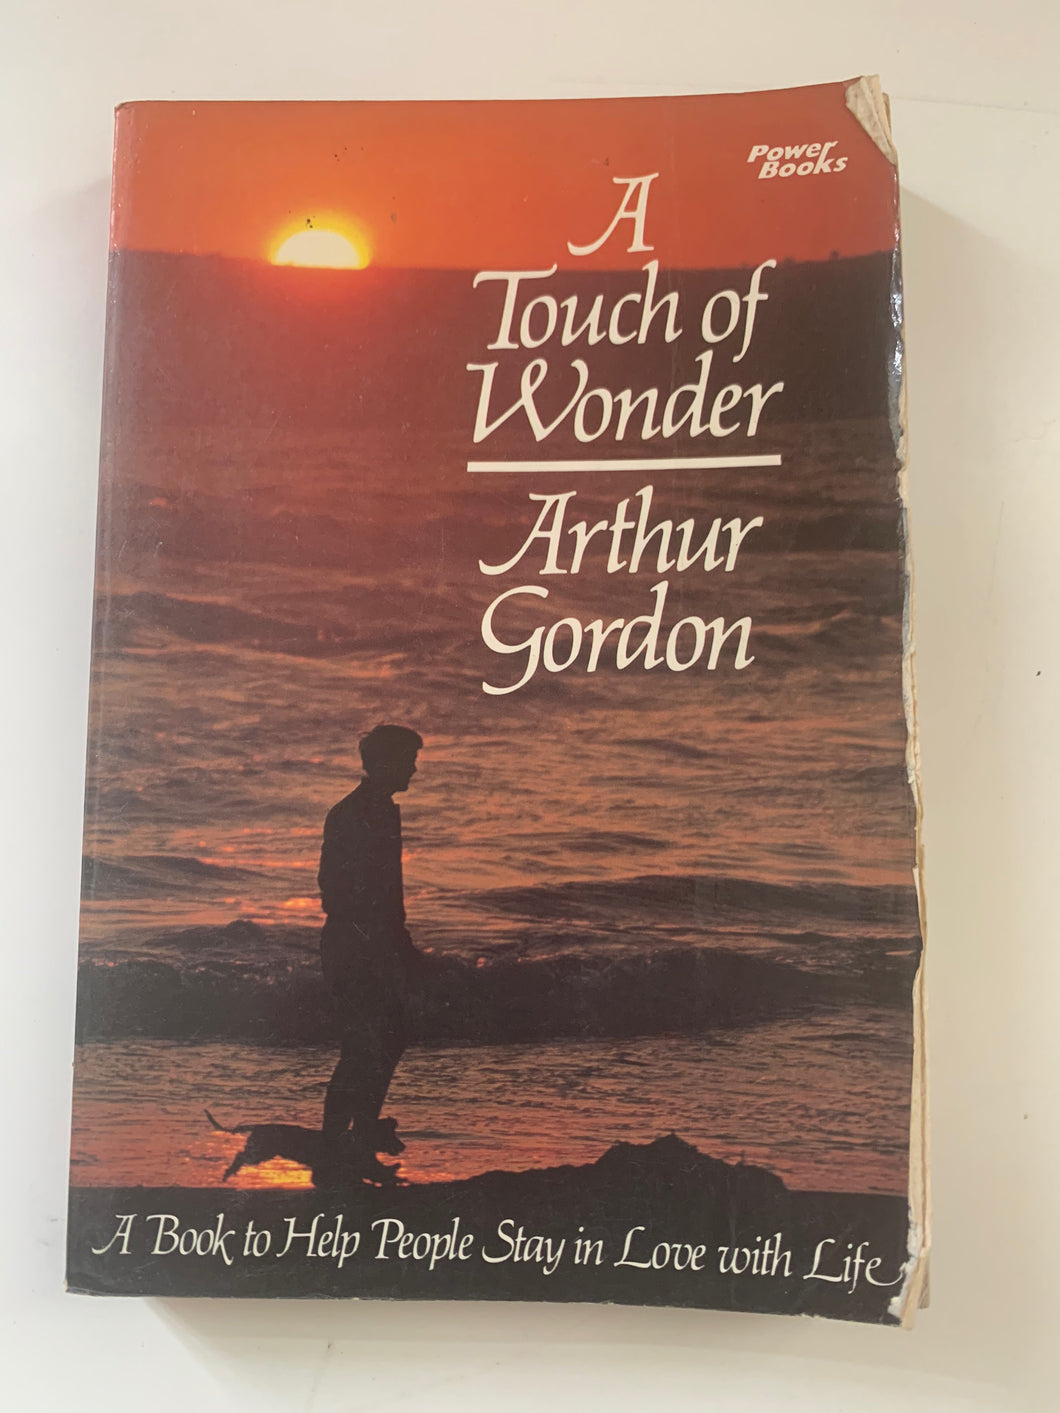 A Touch of Wonder by Arthur Gordon